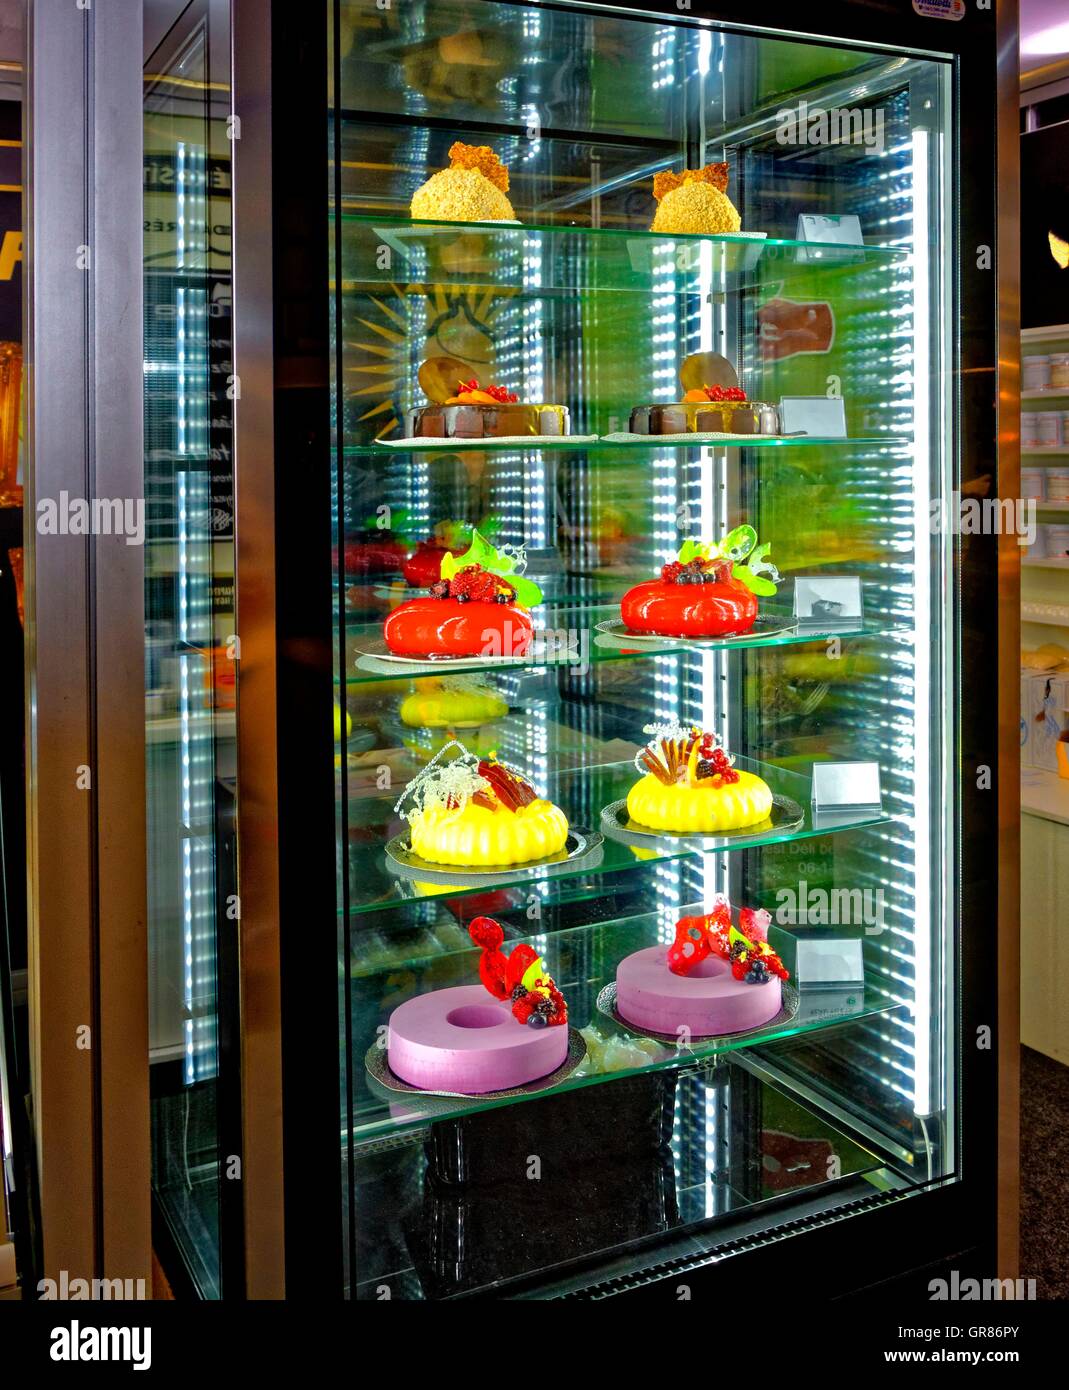 Refrigerator With Semi-Frozen Ice Cream Cakes Stock Photo